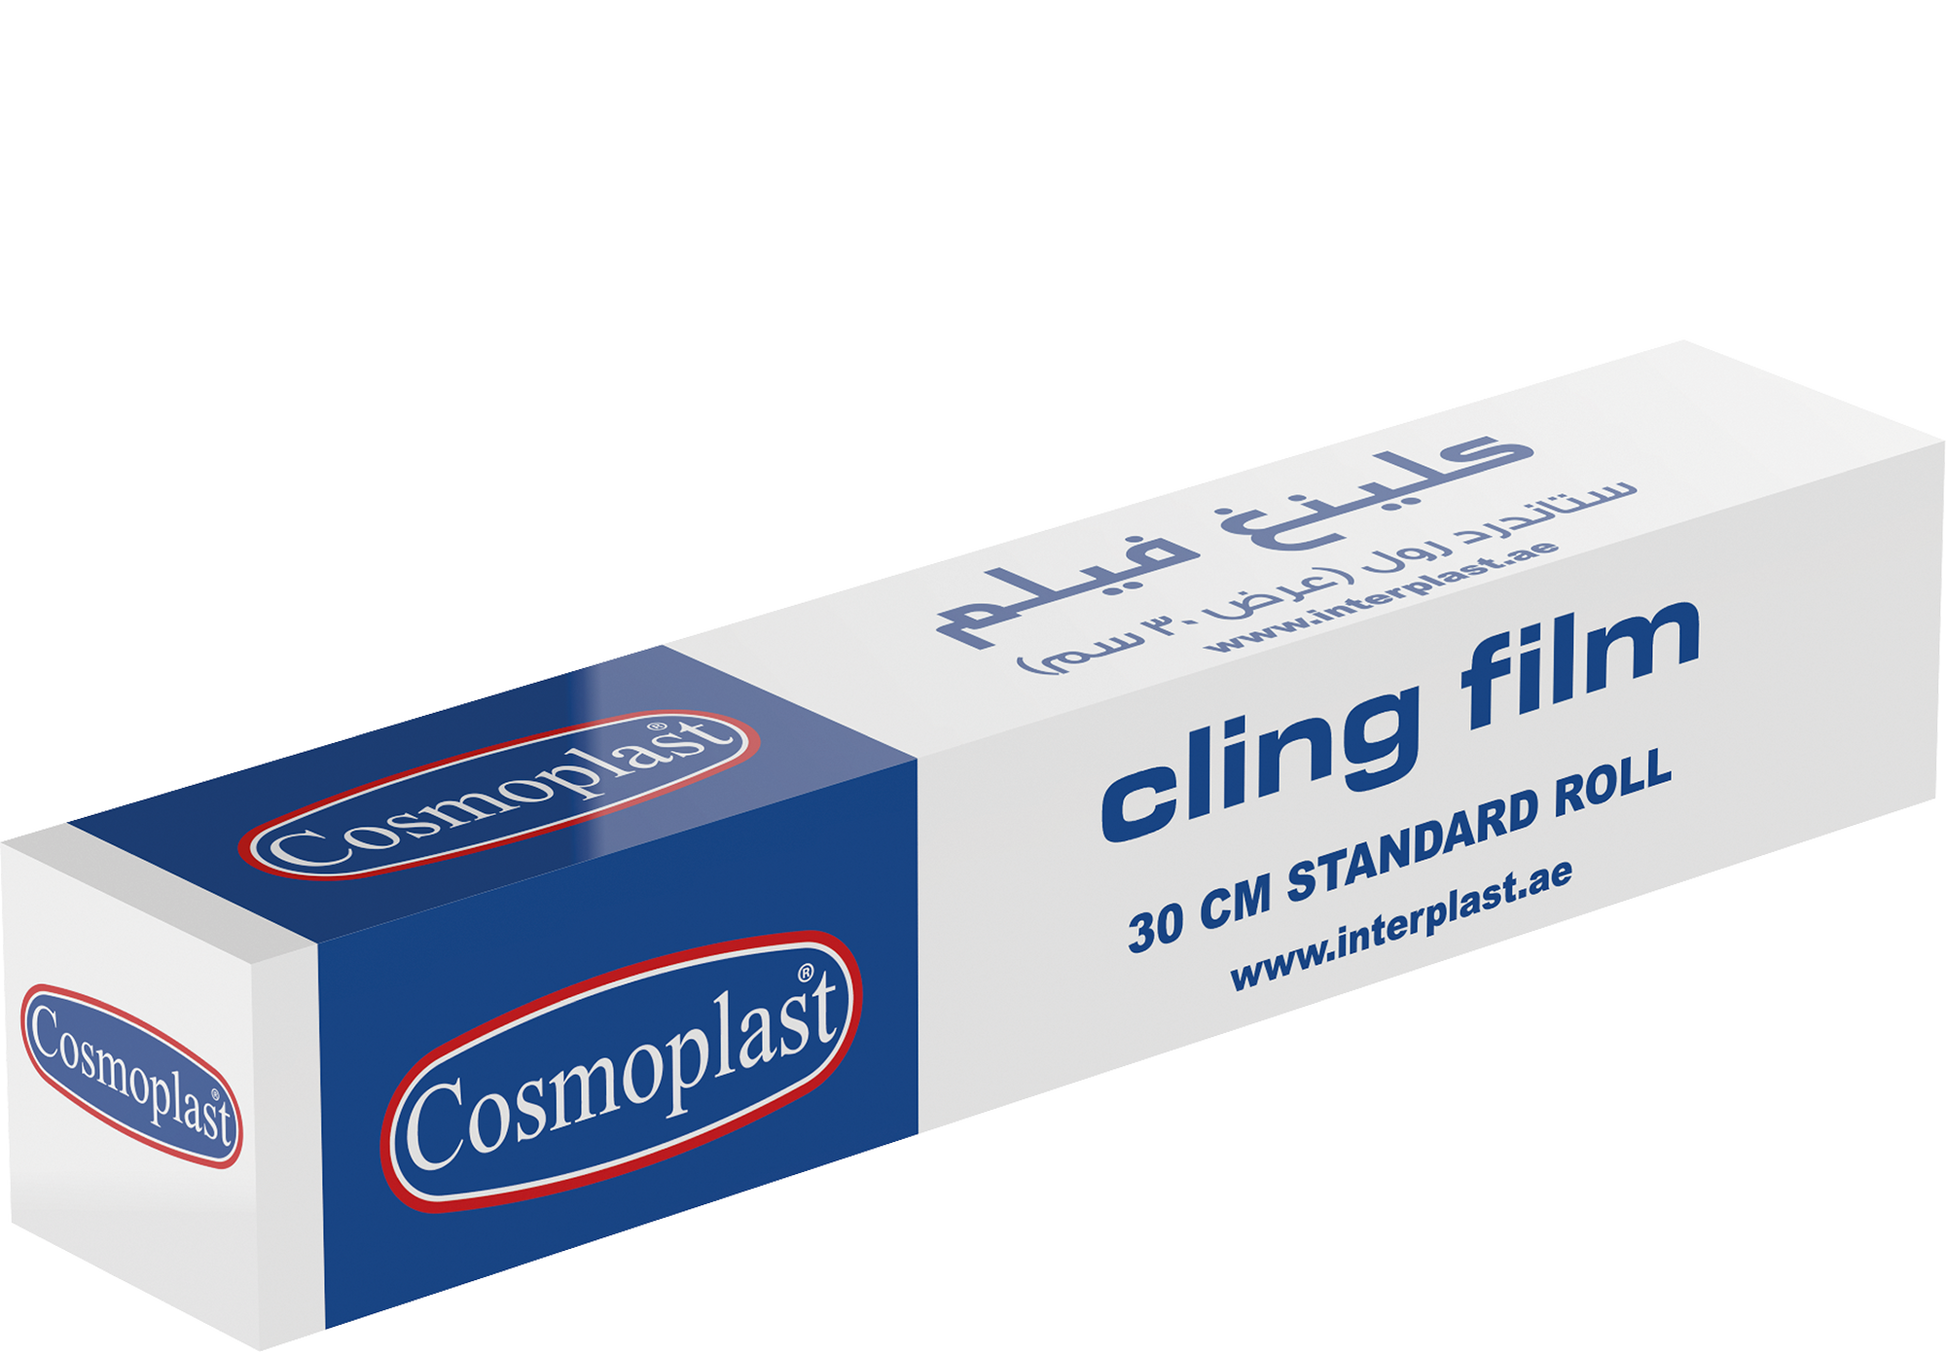 Cling Film 30 cm - Standard Roll